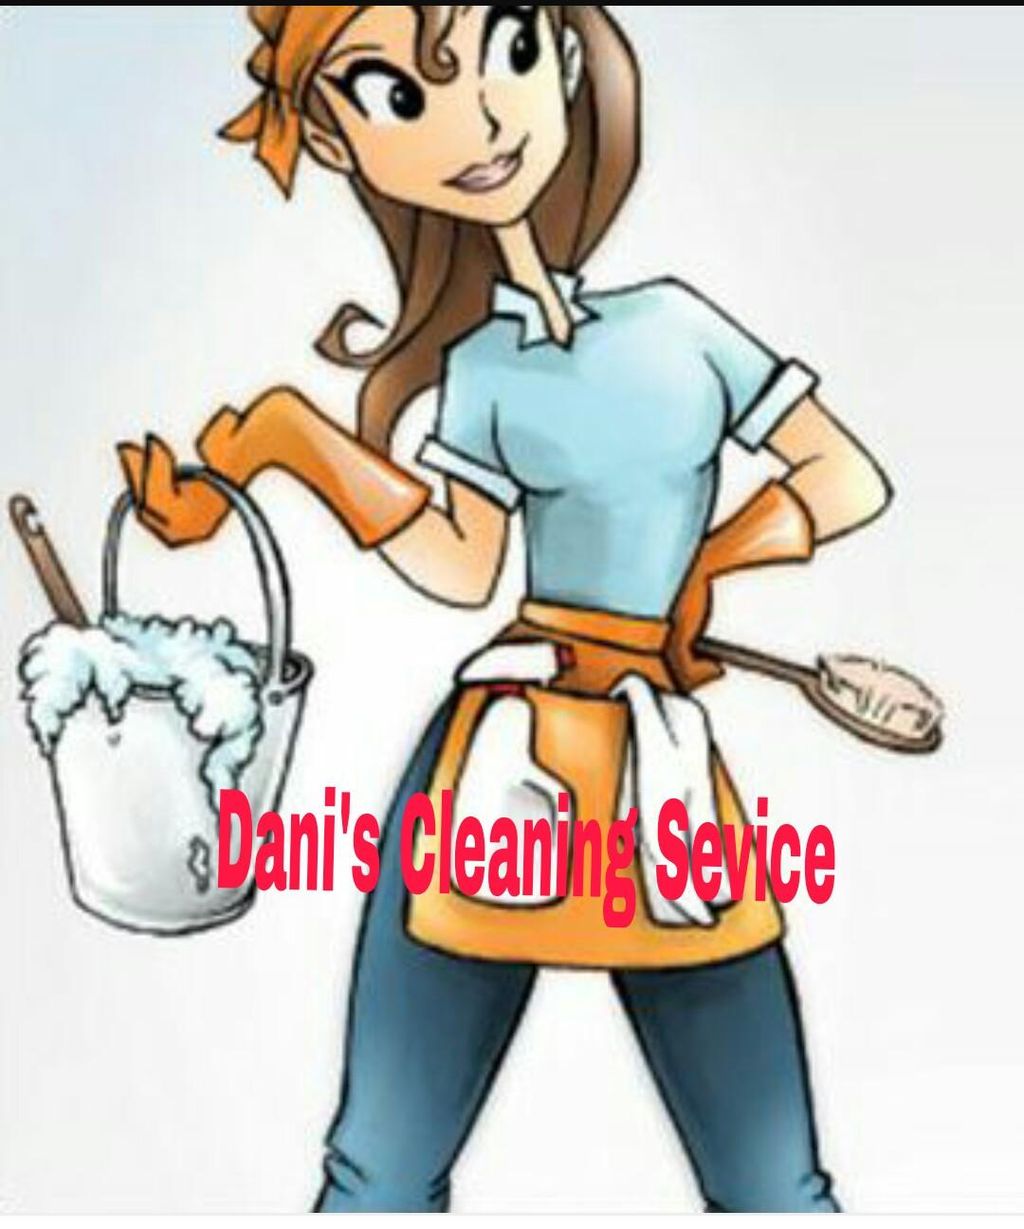 dani 's cleaning